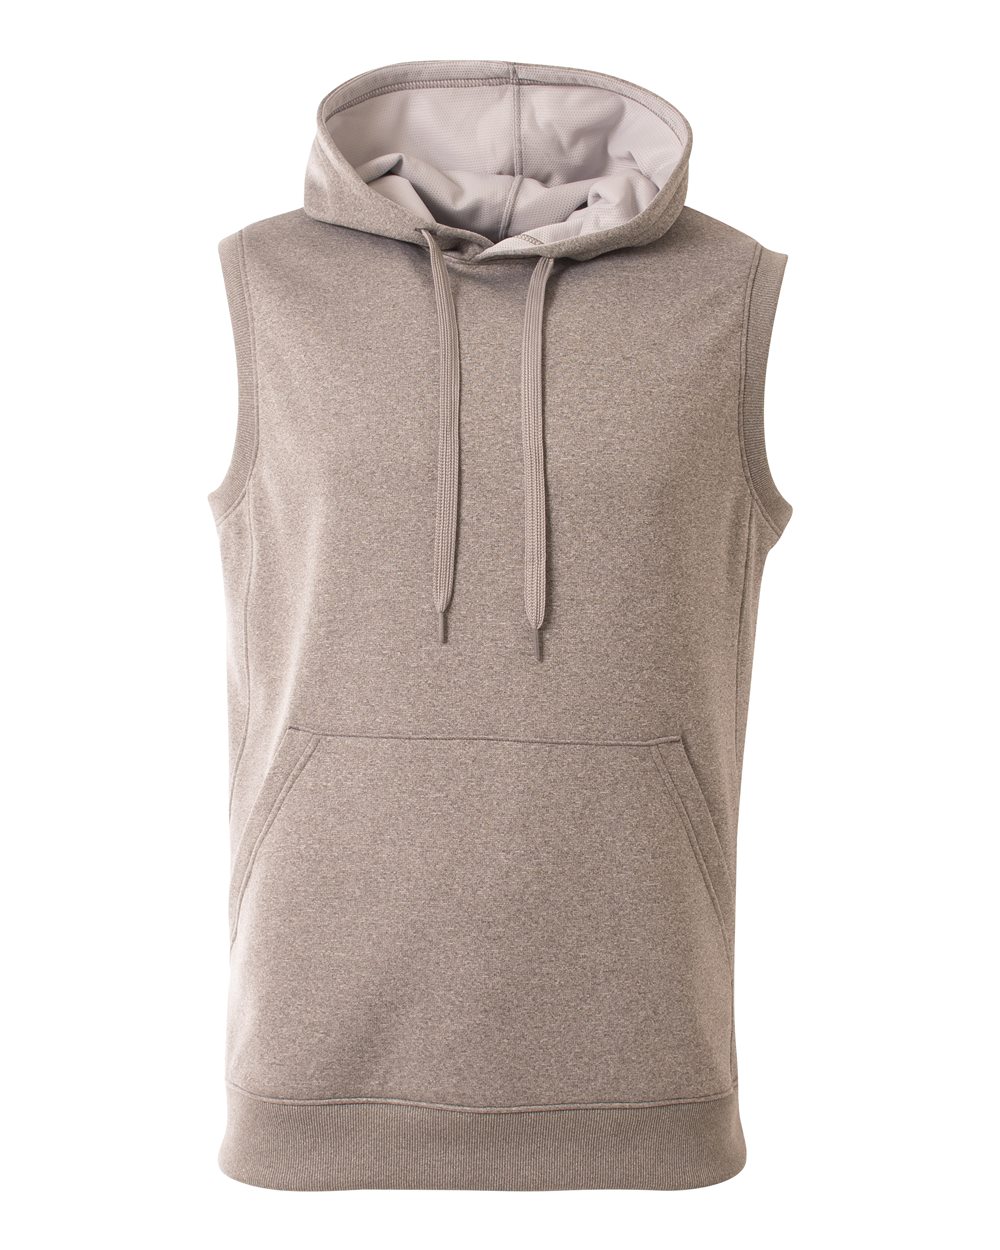 agility sleeveless hoodie heather